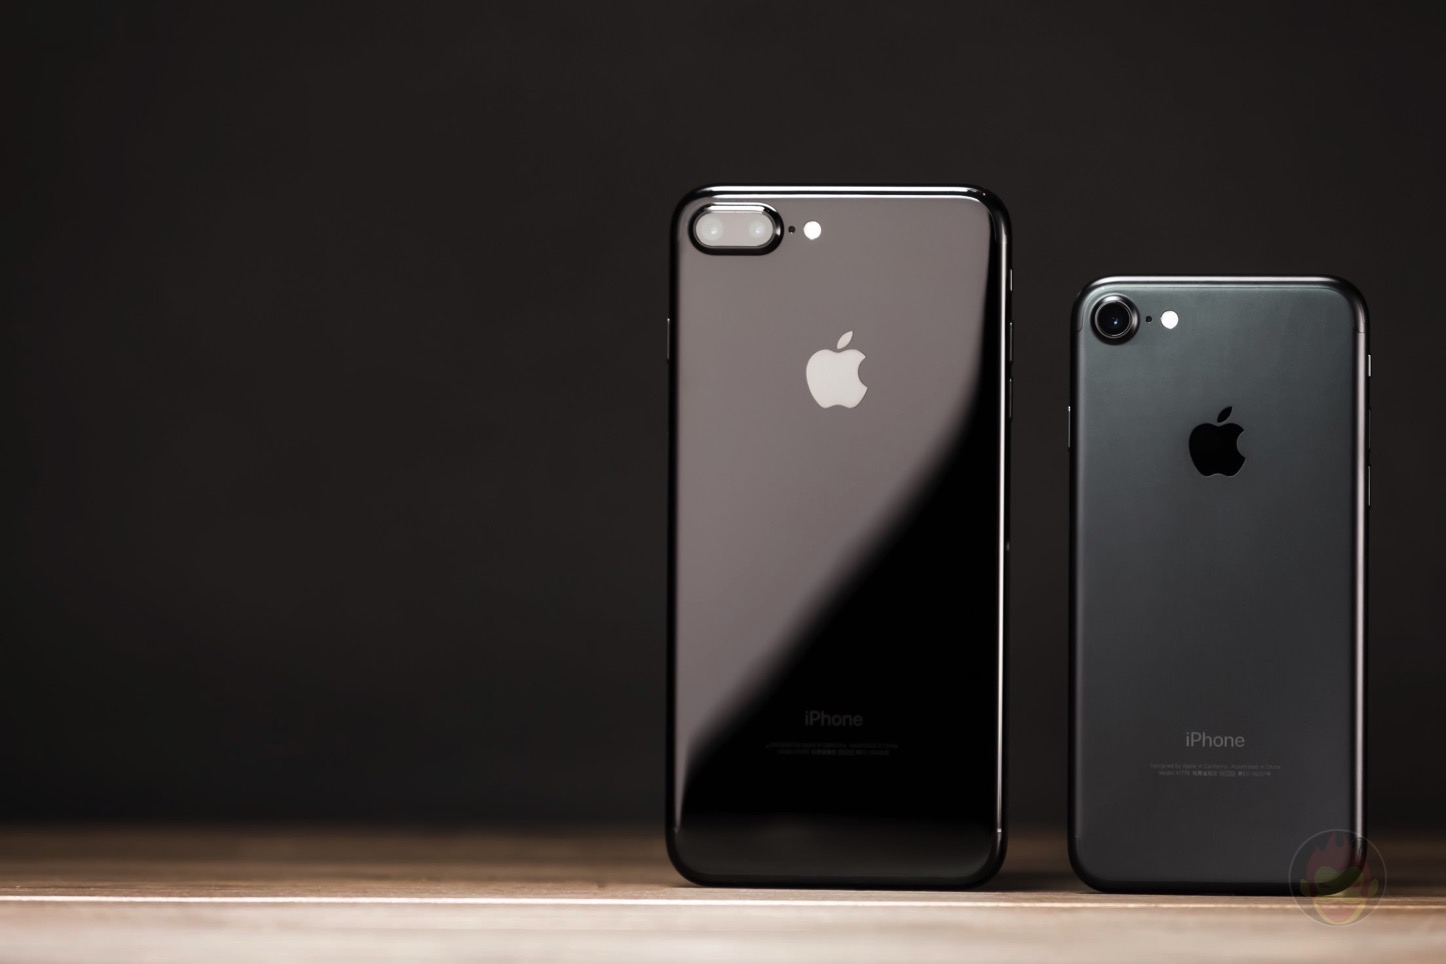 iPhone-7-Plus-Jet-Black-Design-review-07.jpg